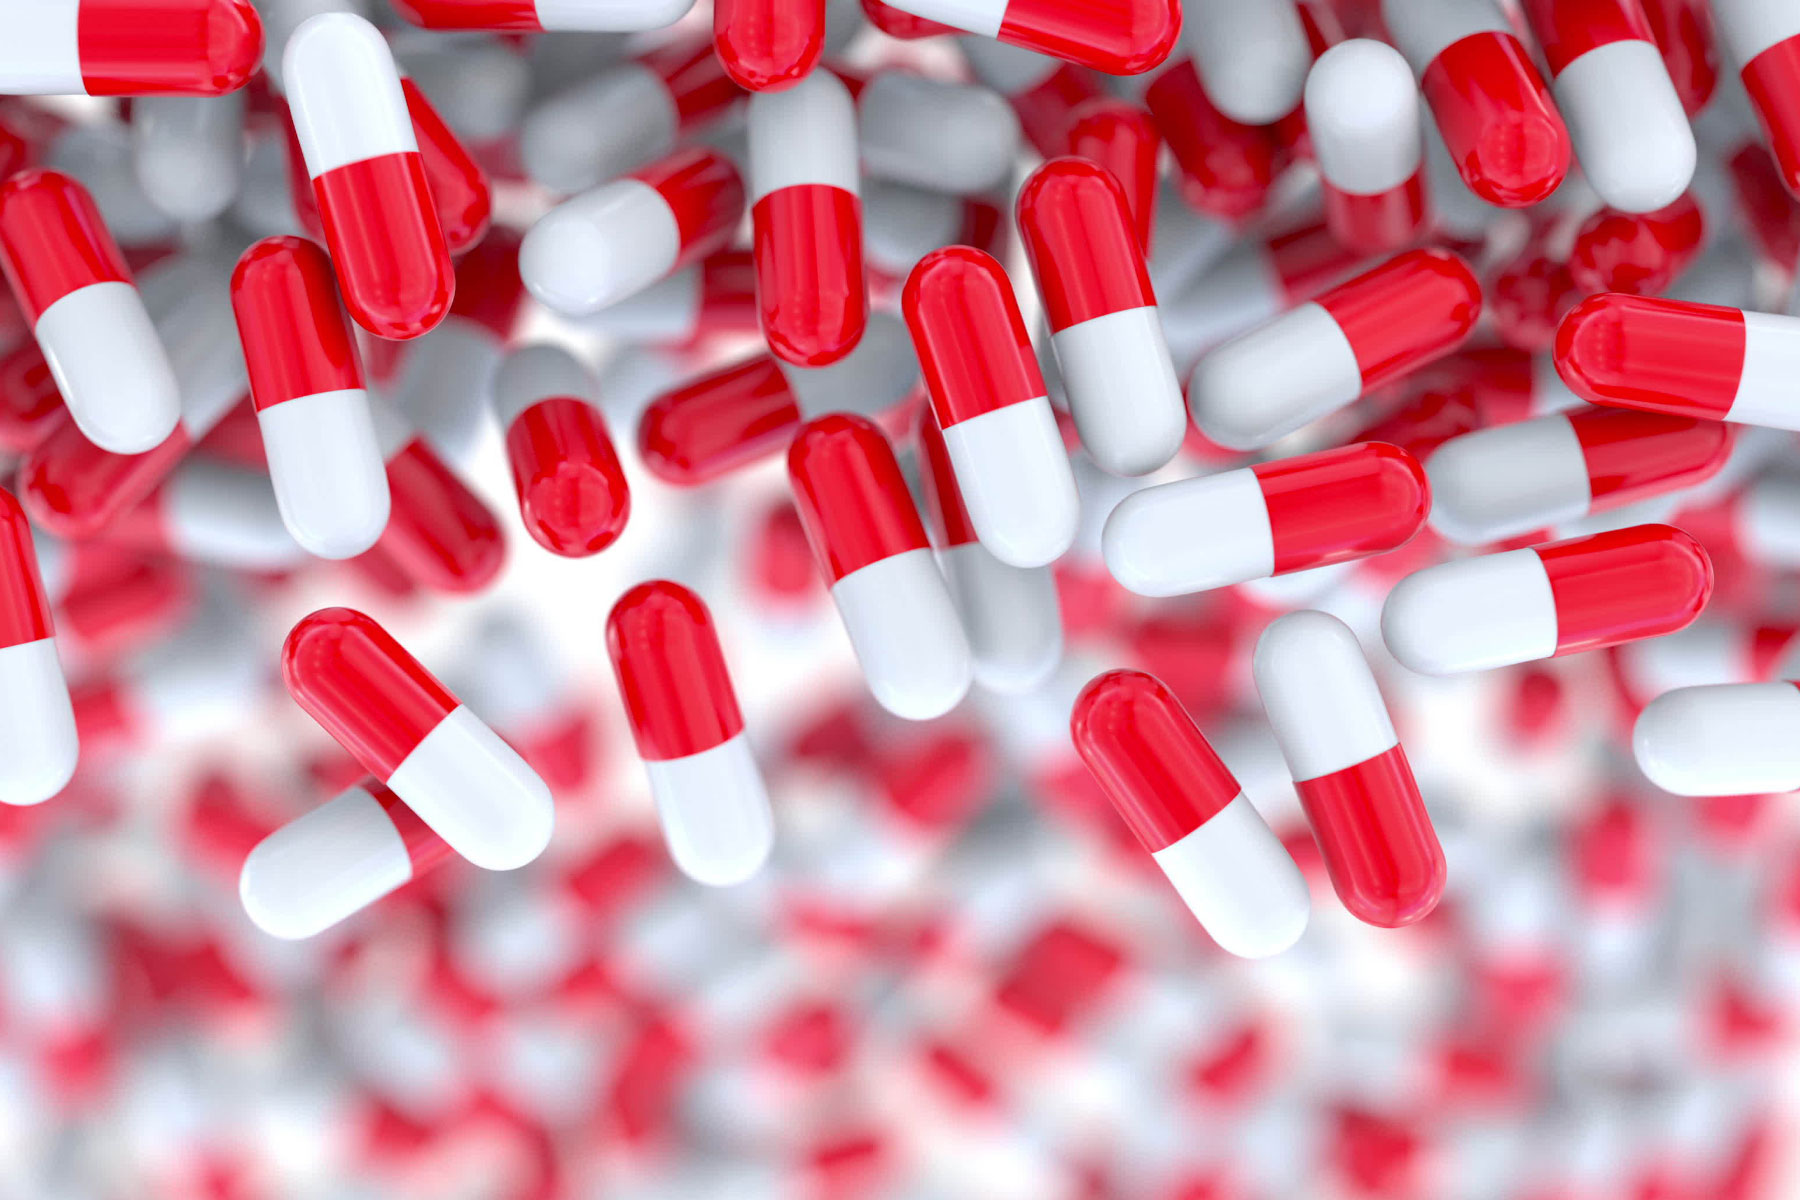 Antibiotic resistance: people will die when antibiotics fail